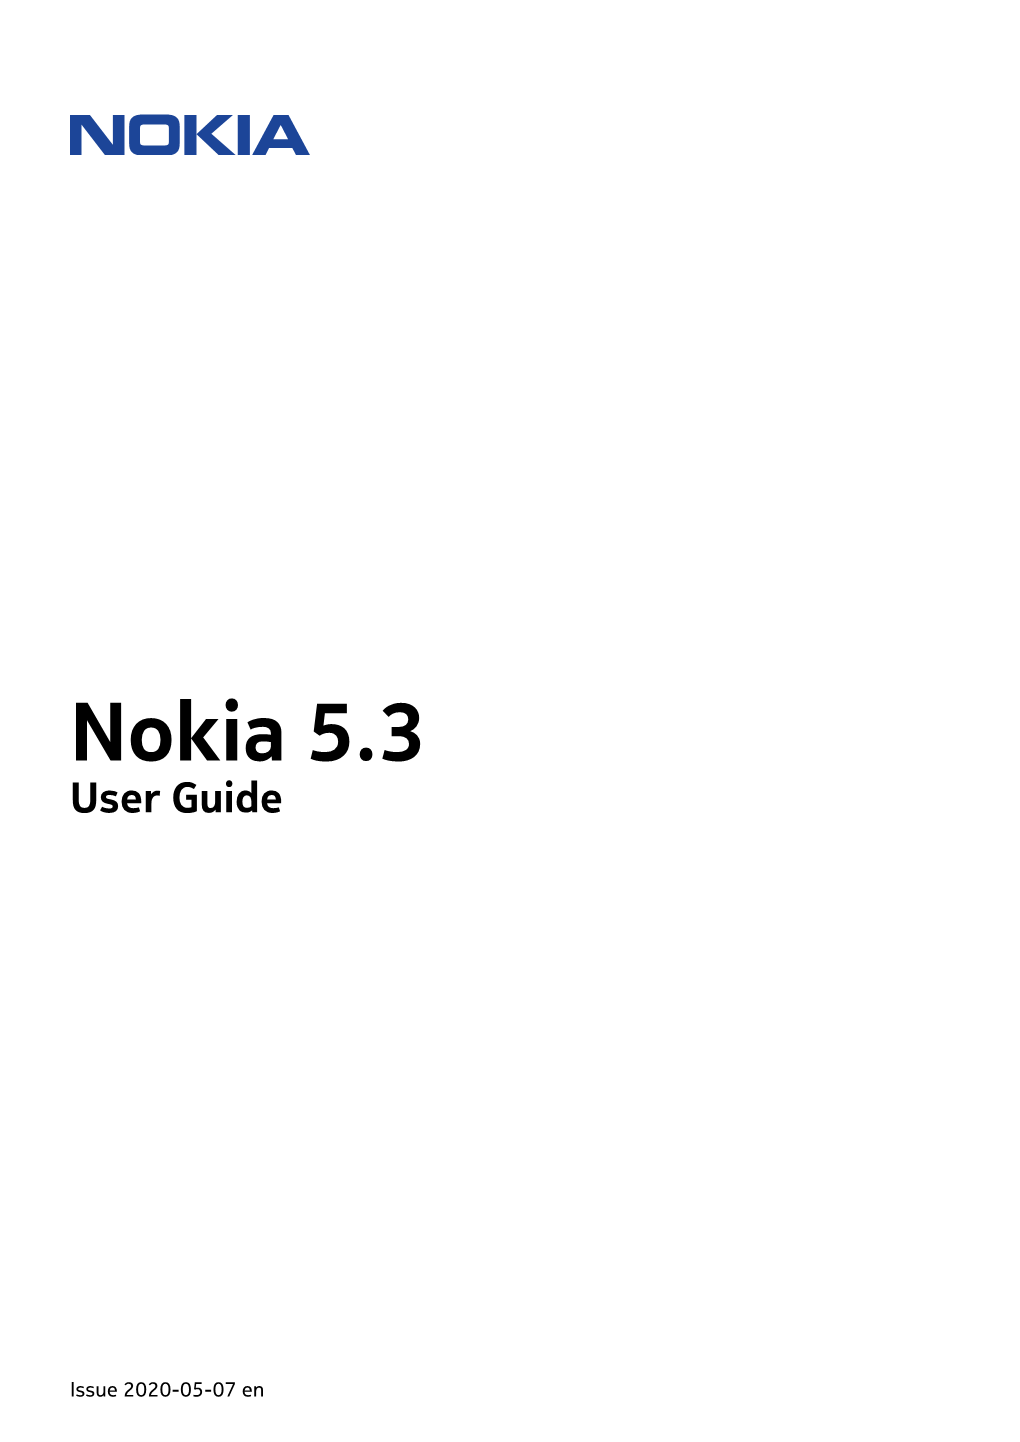 Nokia 5.3 User Guide